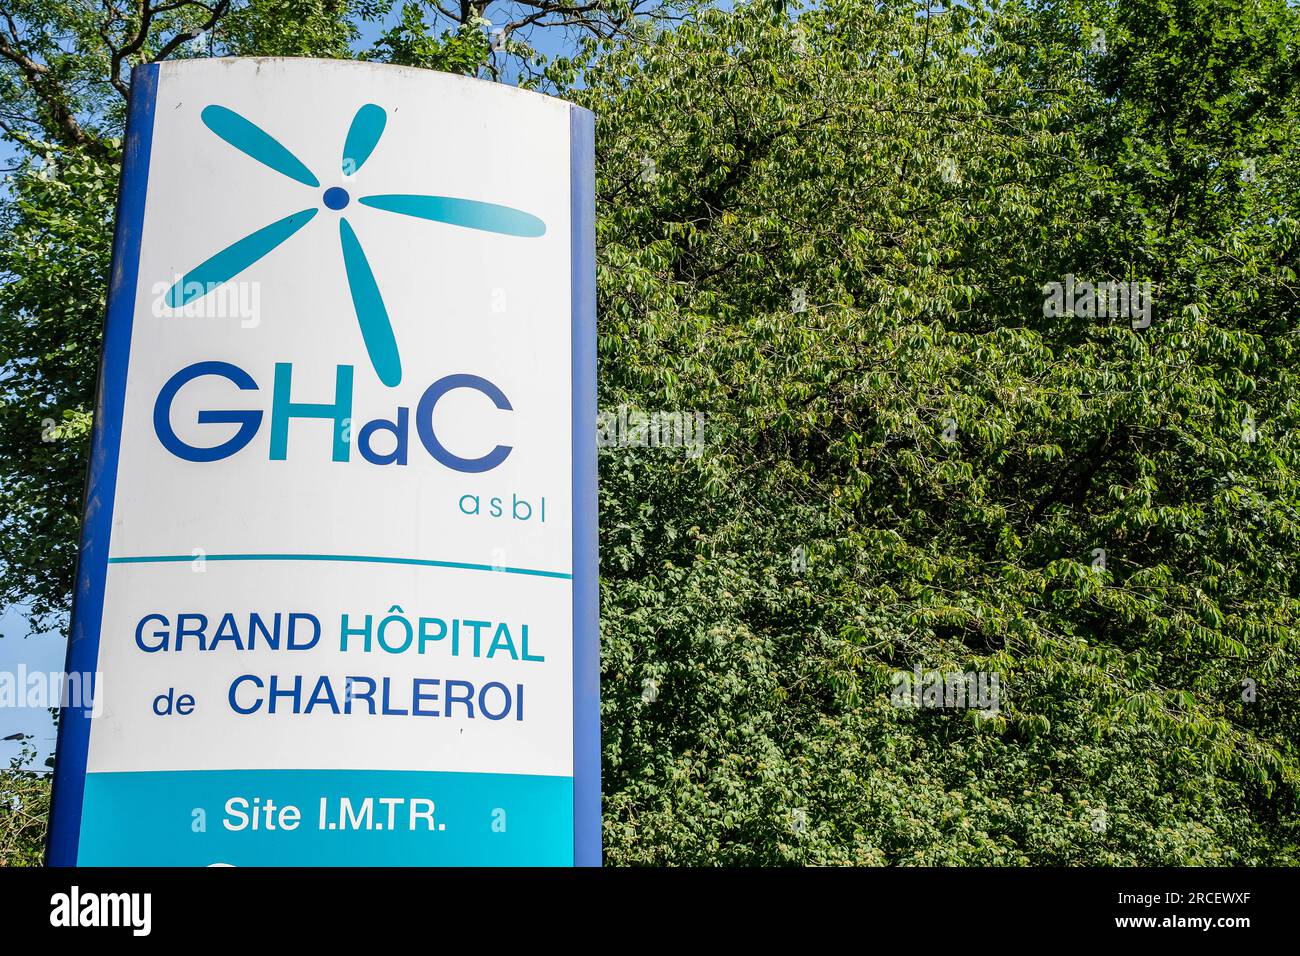 Grand Hopital de Charleroi - IMTR site | Grand Hopital de Charleroi - site de l'IMTR Stock Photo